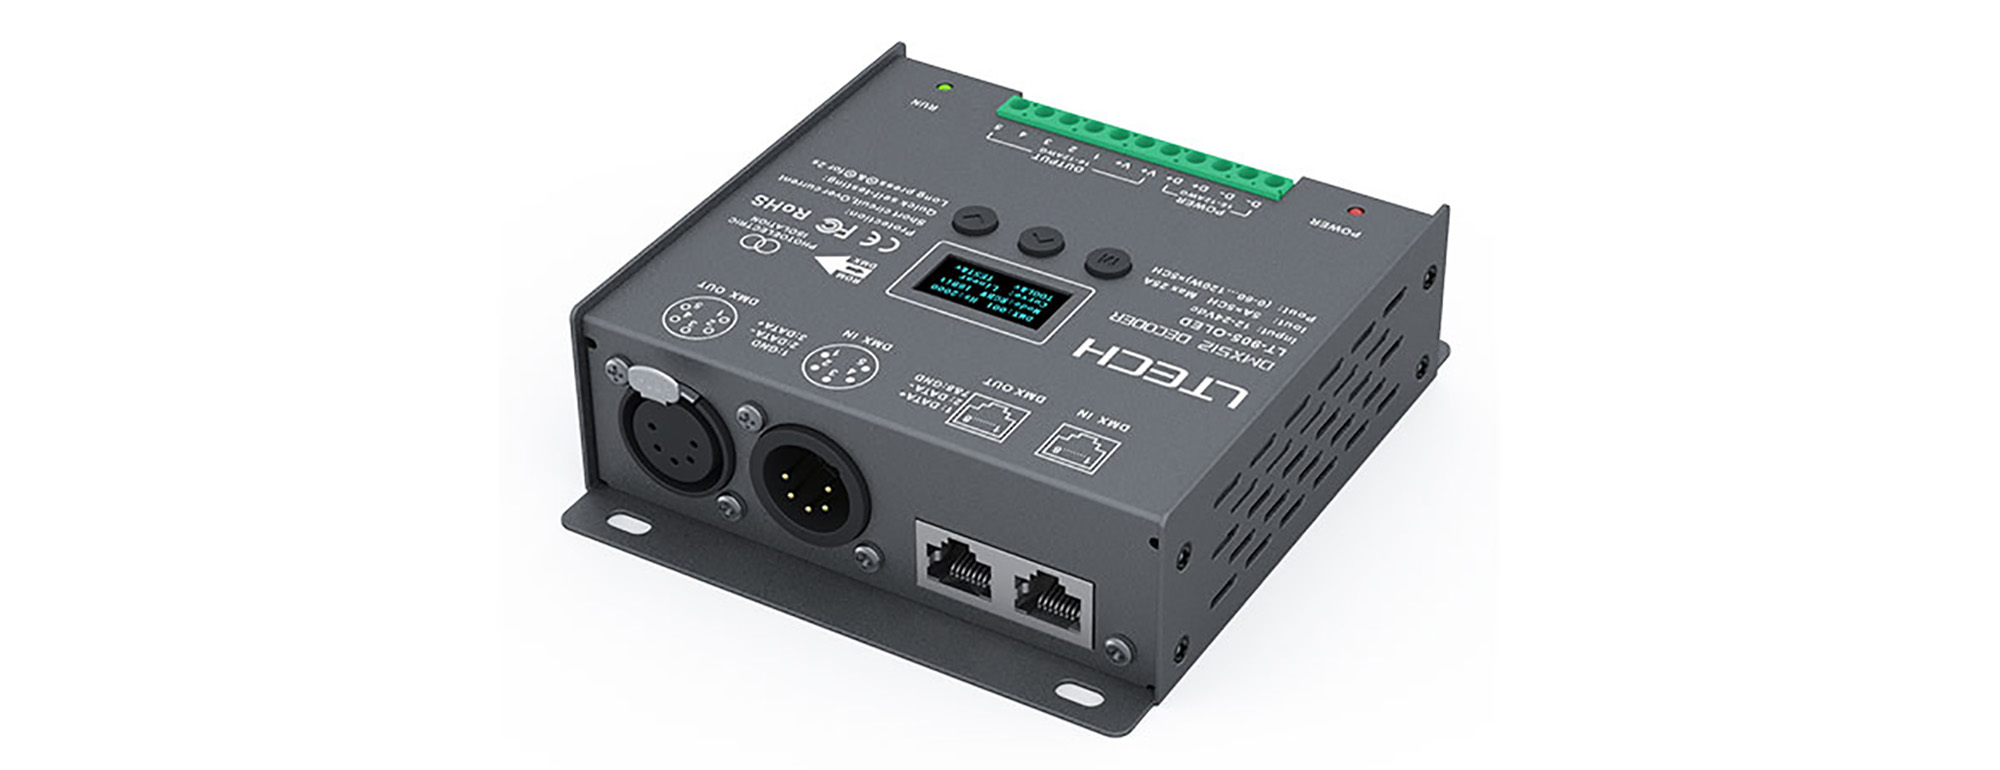 905-OLED  5Ch 5A CV DMX Decoder; 600W Max.Power; XLR-5 & RJ45 Port; Self testing; DMX512/RDM I/P signal; IP20.